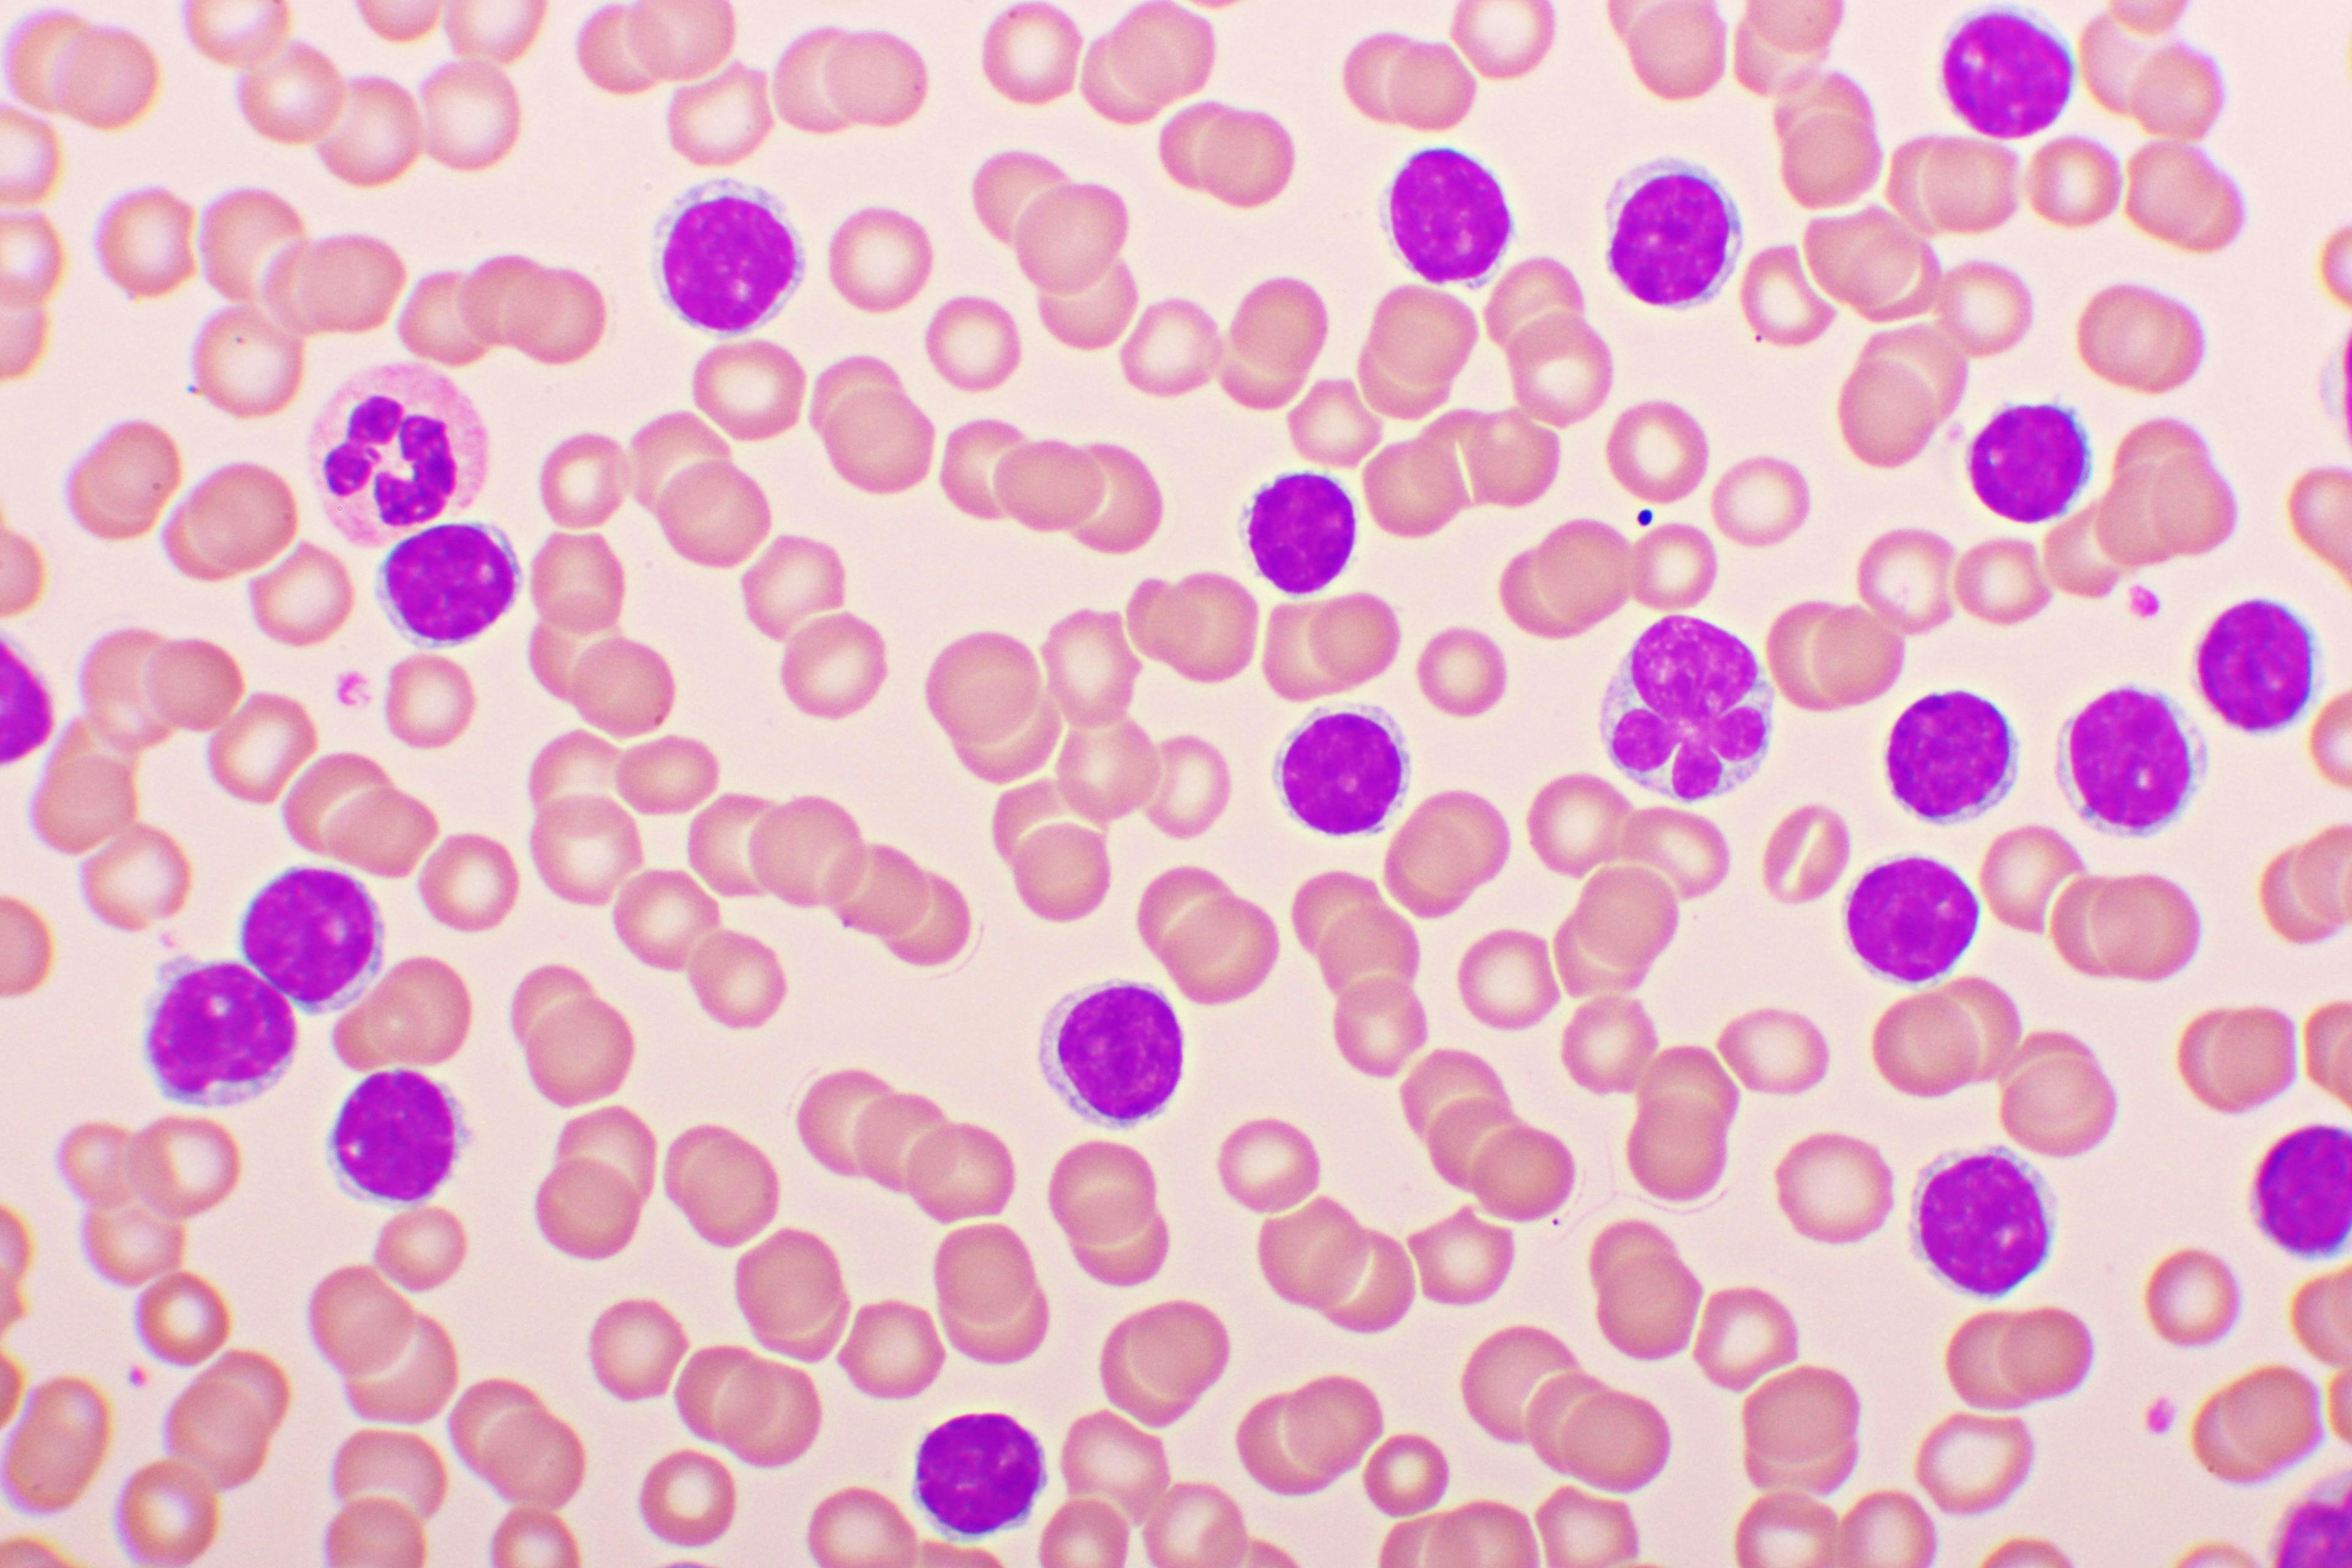 Microscopic view of acute lymphocytic leukemia cells -- Image credit: jarun011 | stock.adobe.com